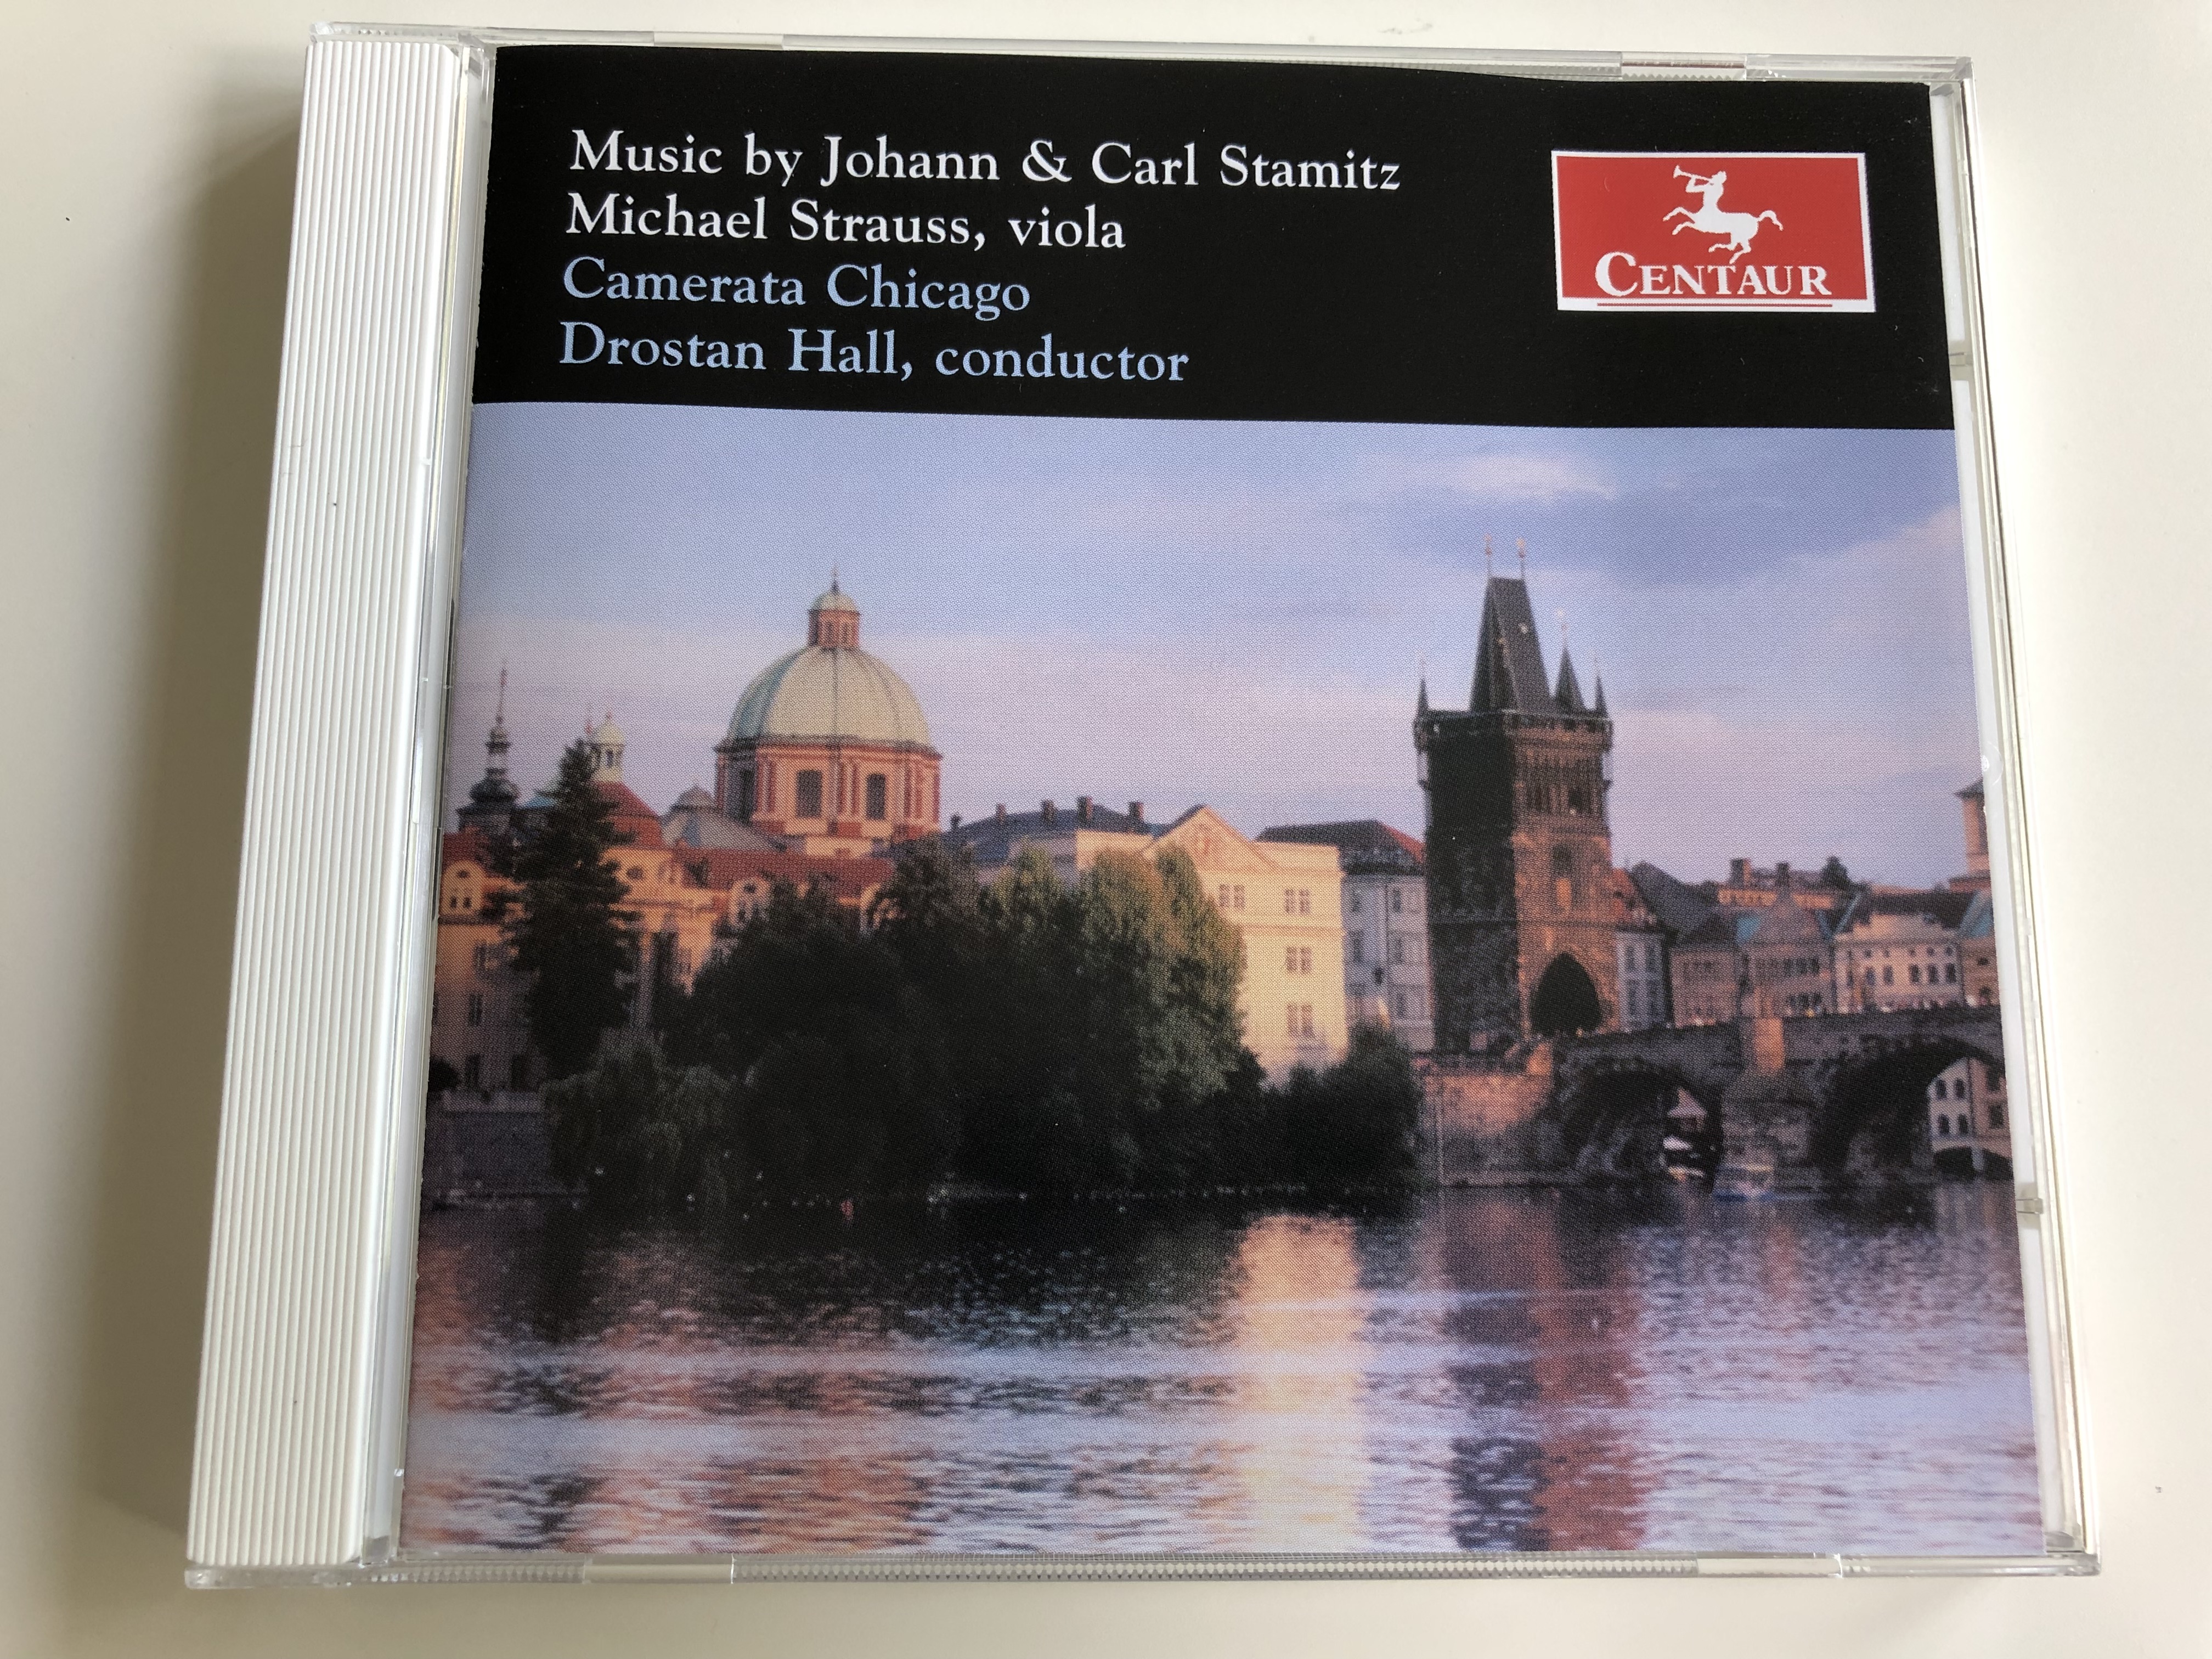 -music-by-johann-carl-stamitz-michael-strauss-viola-camerata-chicago-conducted-by-drostan-hall-audio-cd-2007-crc-2860-1-.jpg